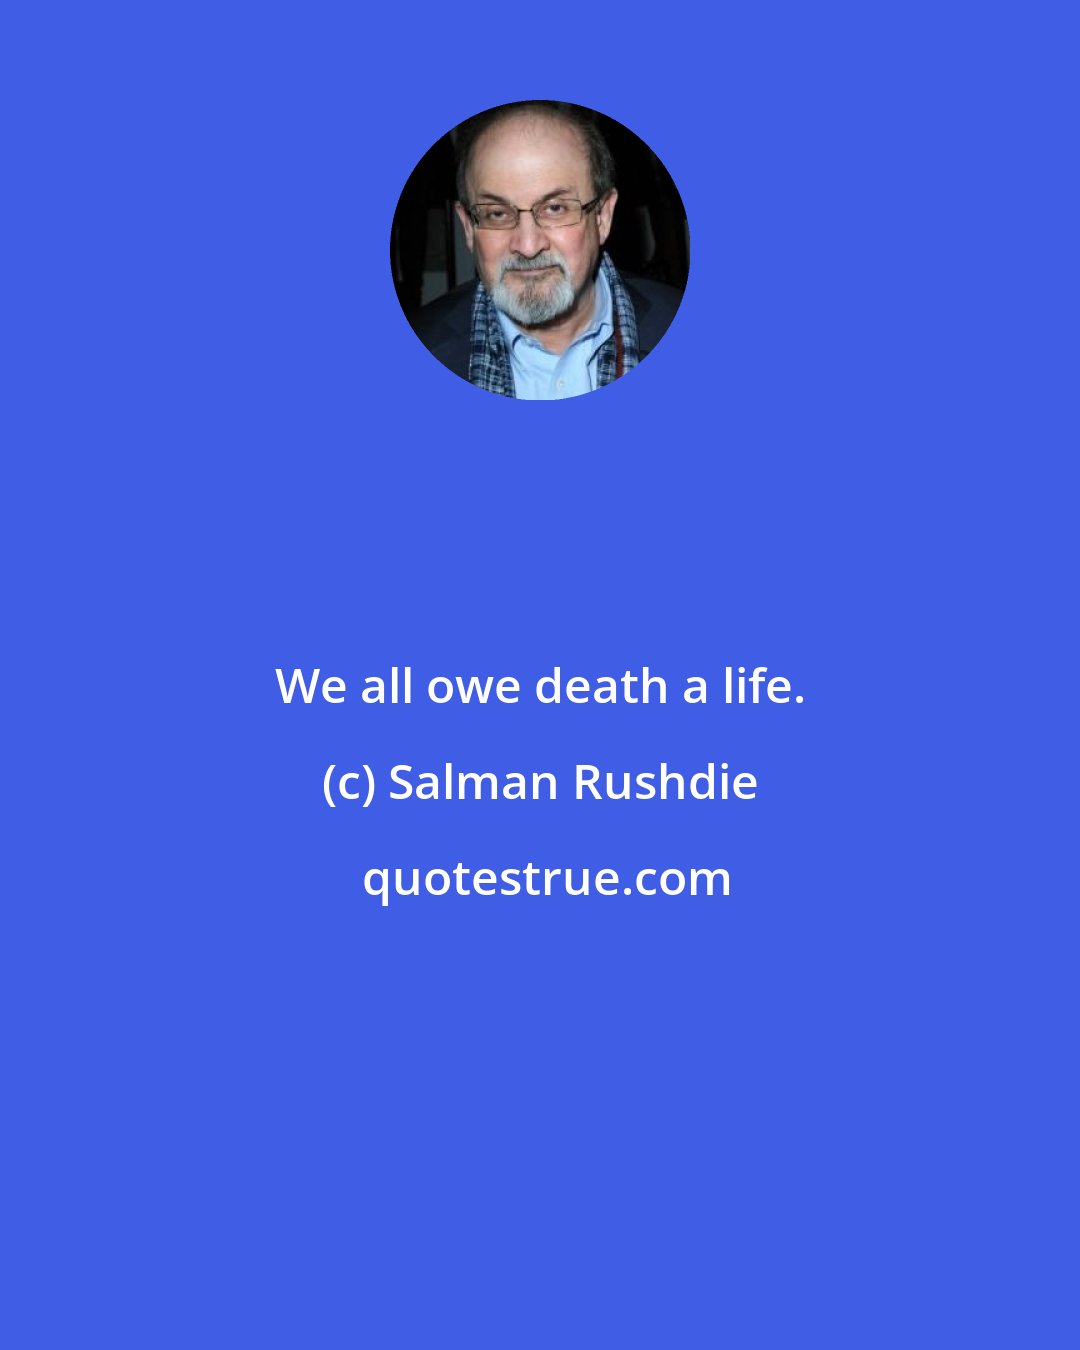 Salman Rushdie: We all owe death a life.